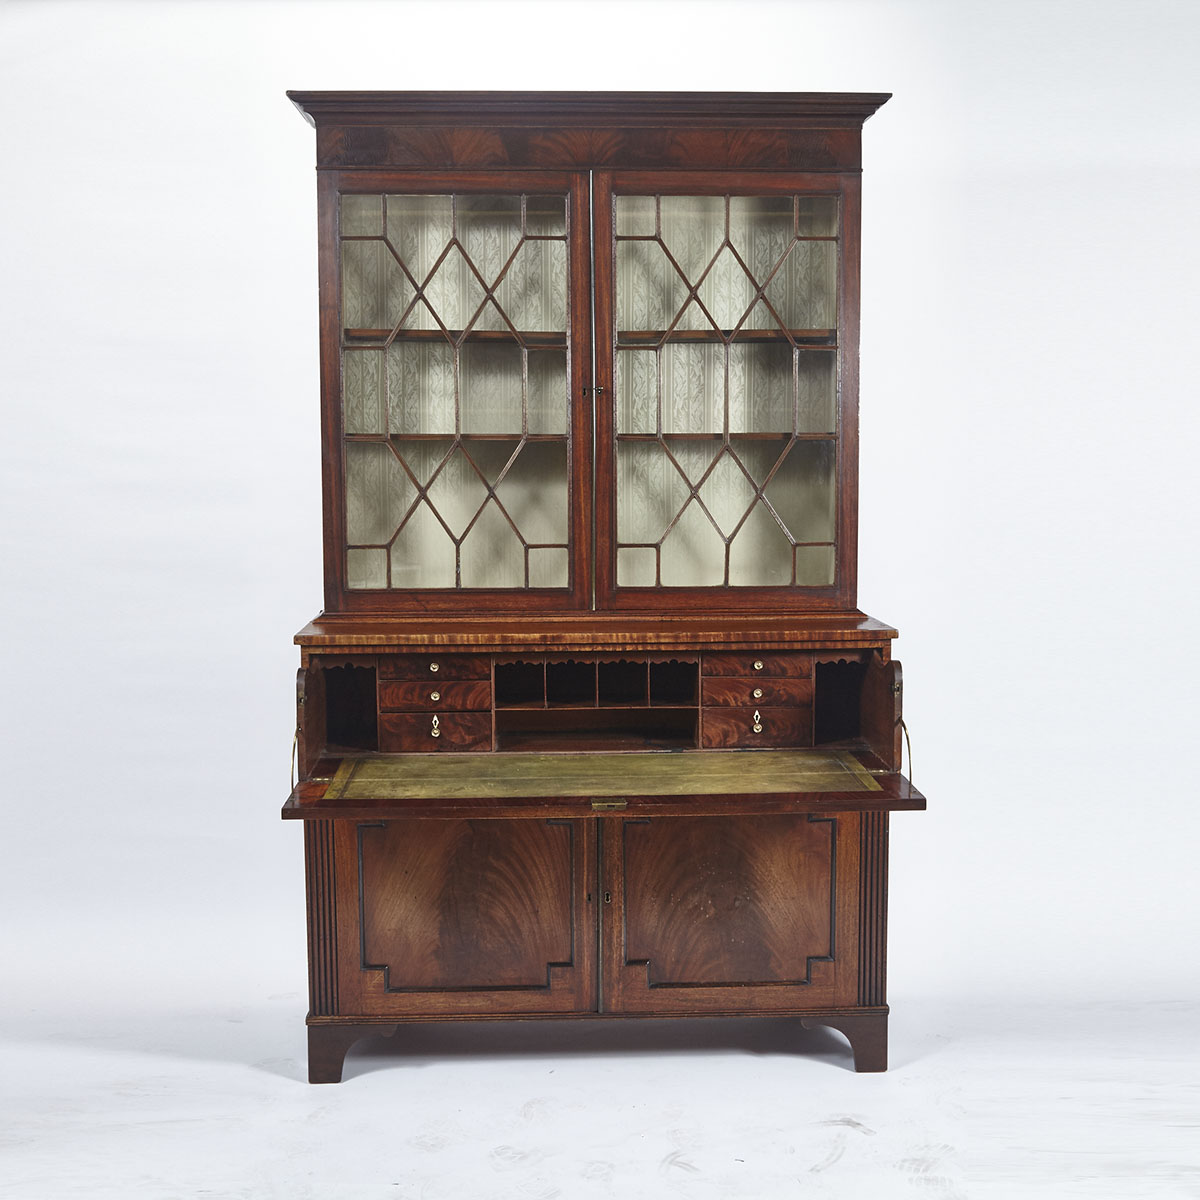 Georgian Crossbanded Flame Mahogany Secretaire Bookcase, early 19th century